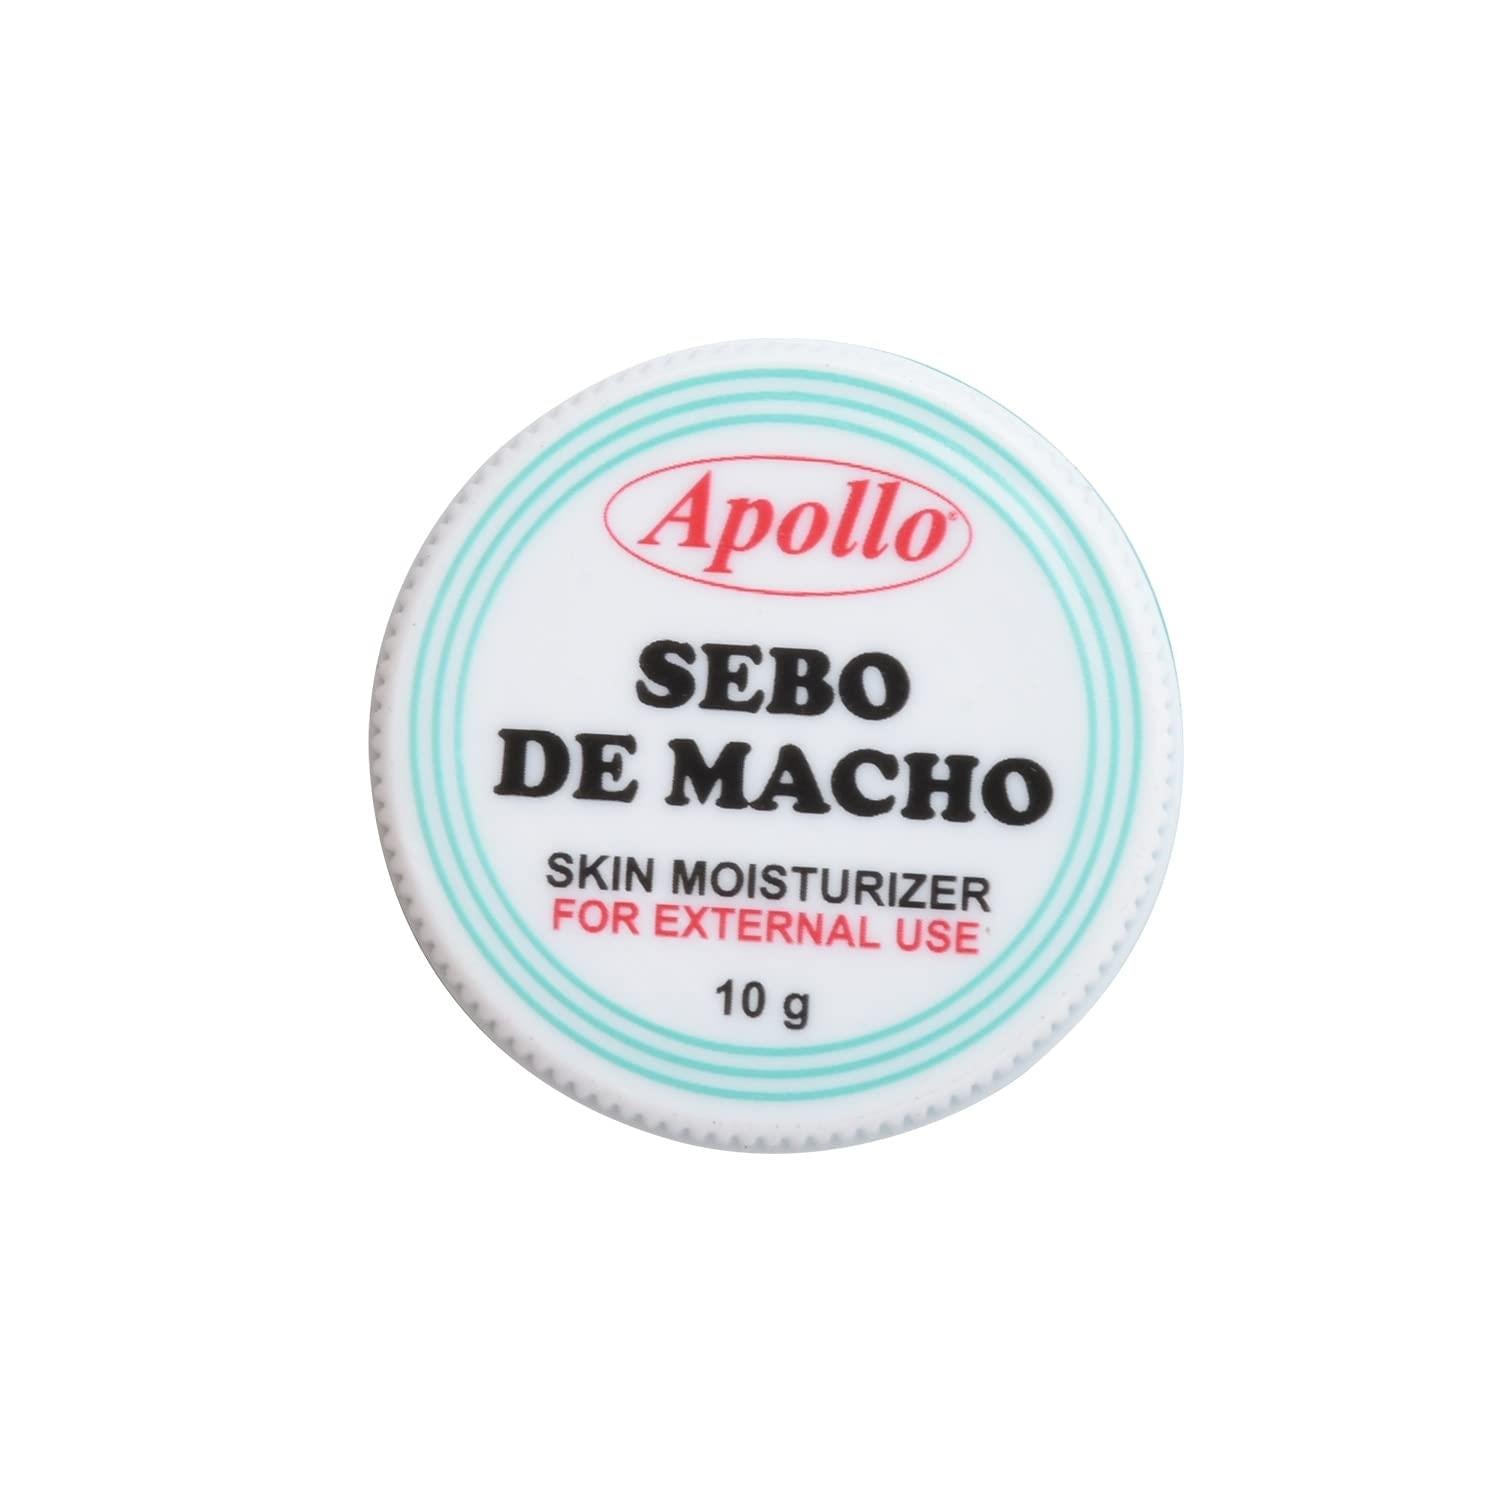 Apollo Sebo de Macho Skin Moisturizer (10g) NEW PACKAGING